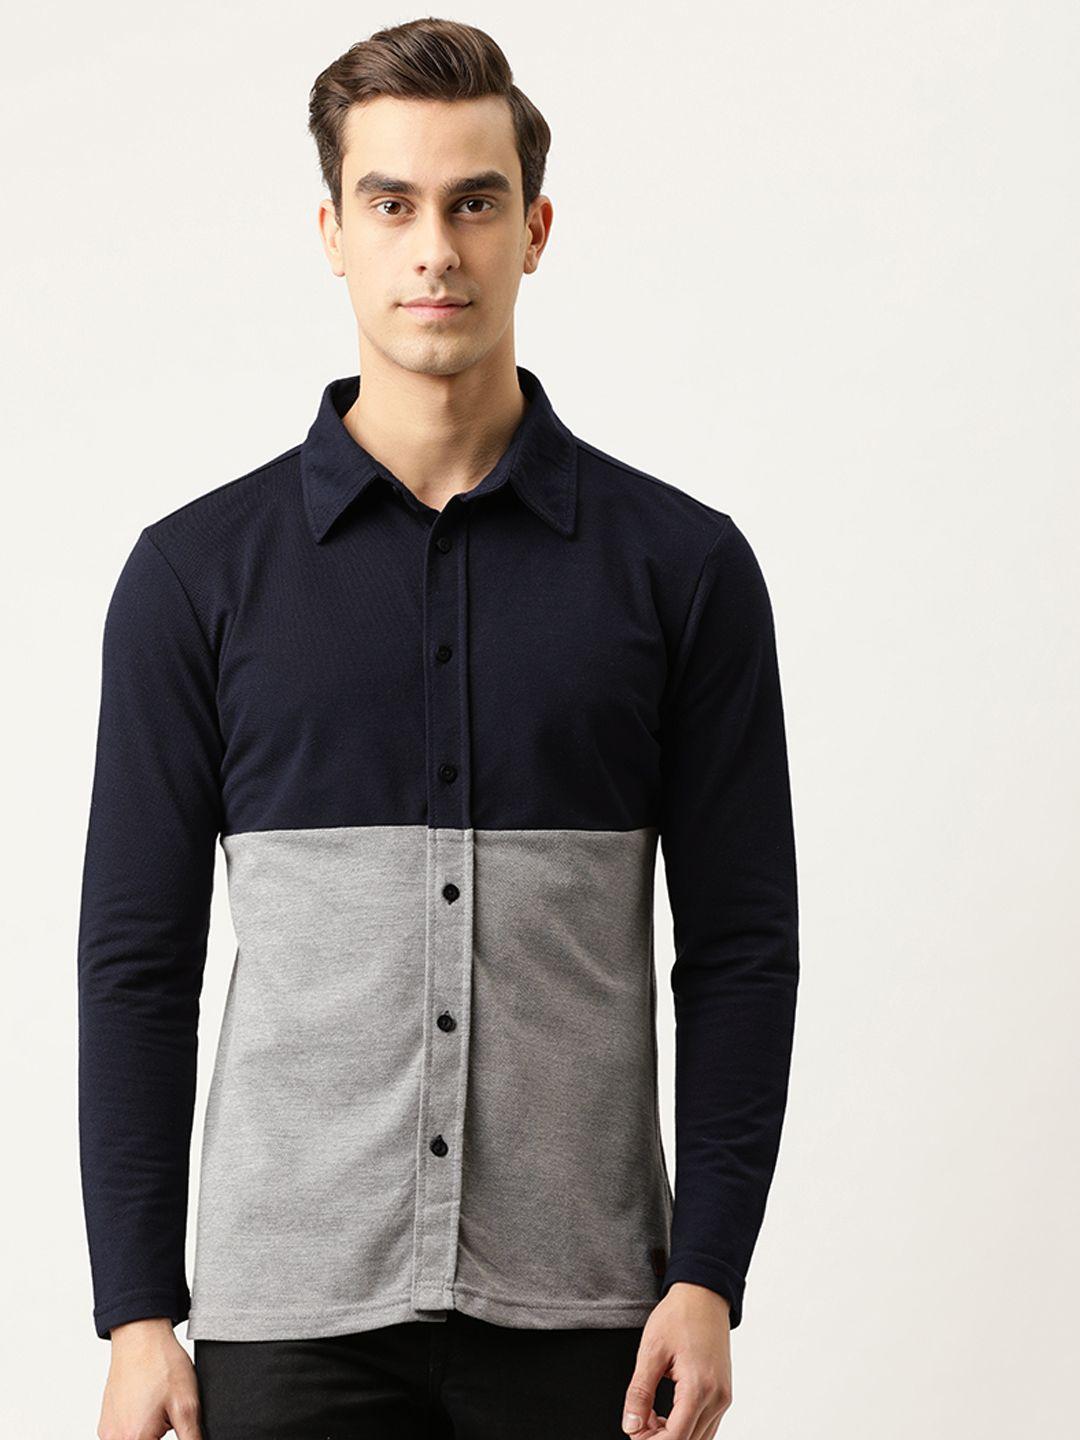 campus sutra men navy blue & grey colourblocked regular fit  casual shirt